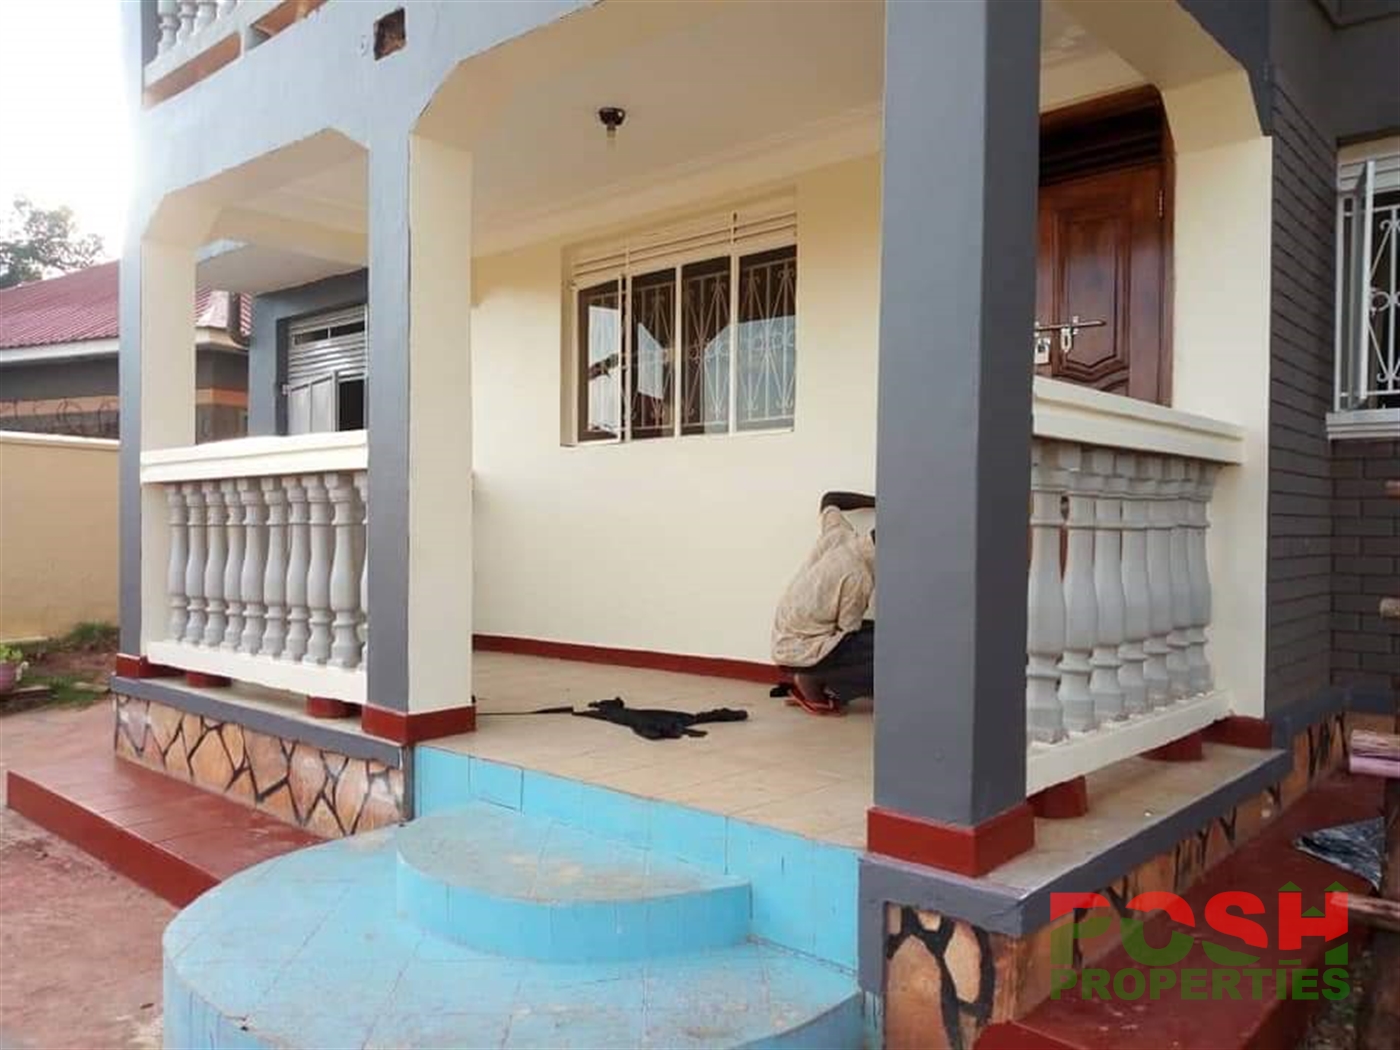 Mansion for sale in Kabalagala Kampala